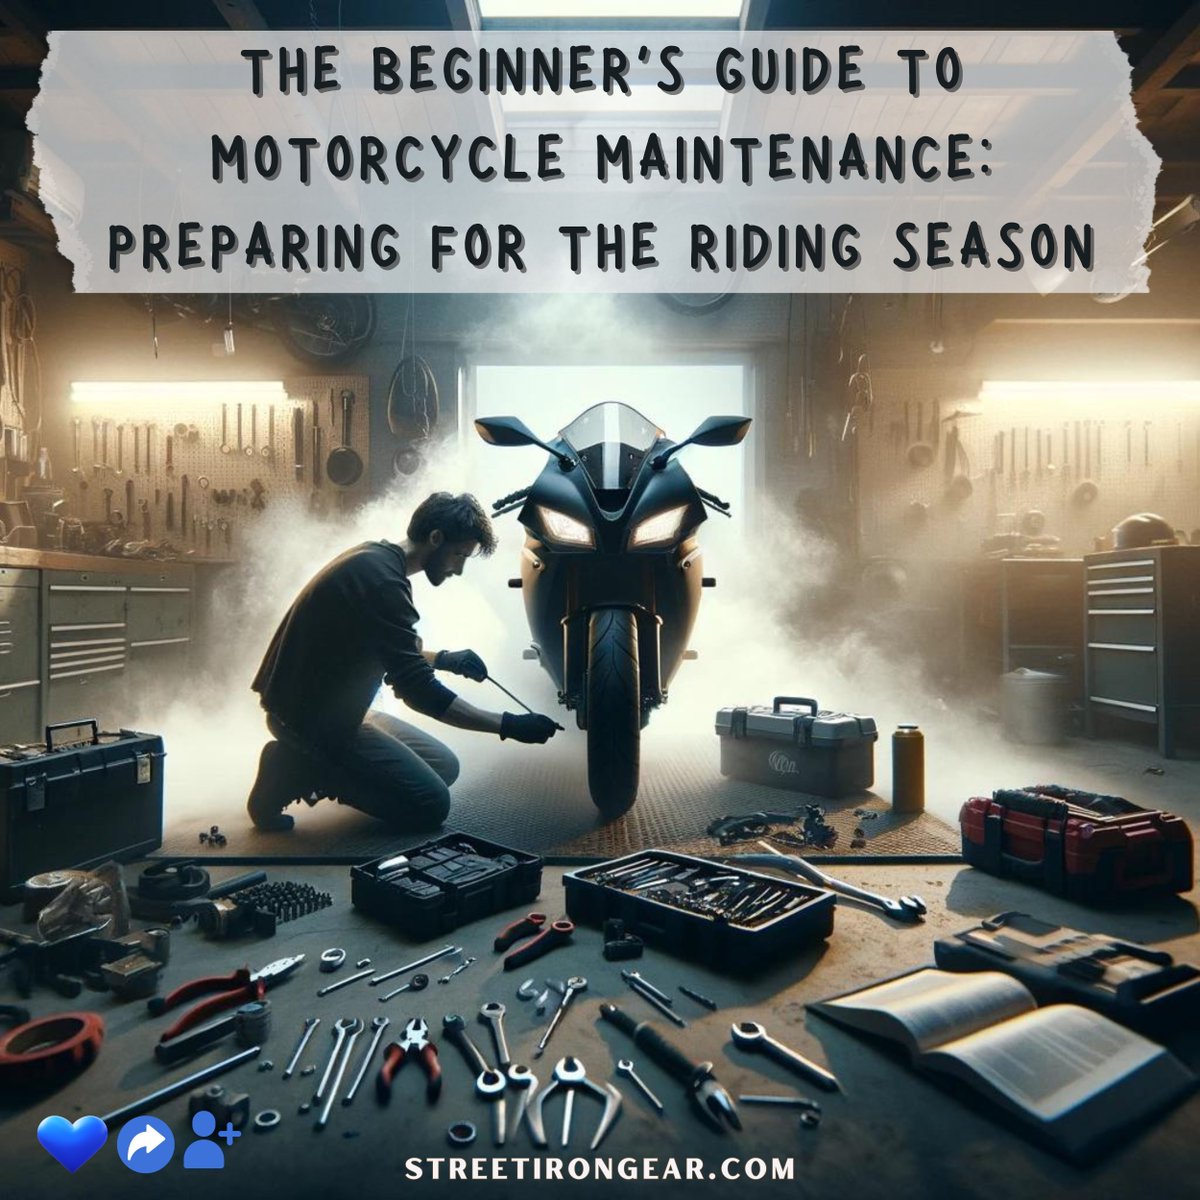 The Beginner's Guide To Motorcycle Maintenance: Preparing For The Riding Season 

Read On
buff.ly/3y1vOOJ 

#MotorcycleMaintenance #RidingSeasonPrep #BikeCare101 #NewRiderTips #DIYBiker #GearUpForRiding  #StreetIronGear